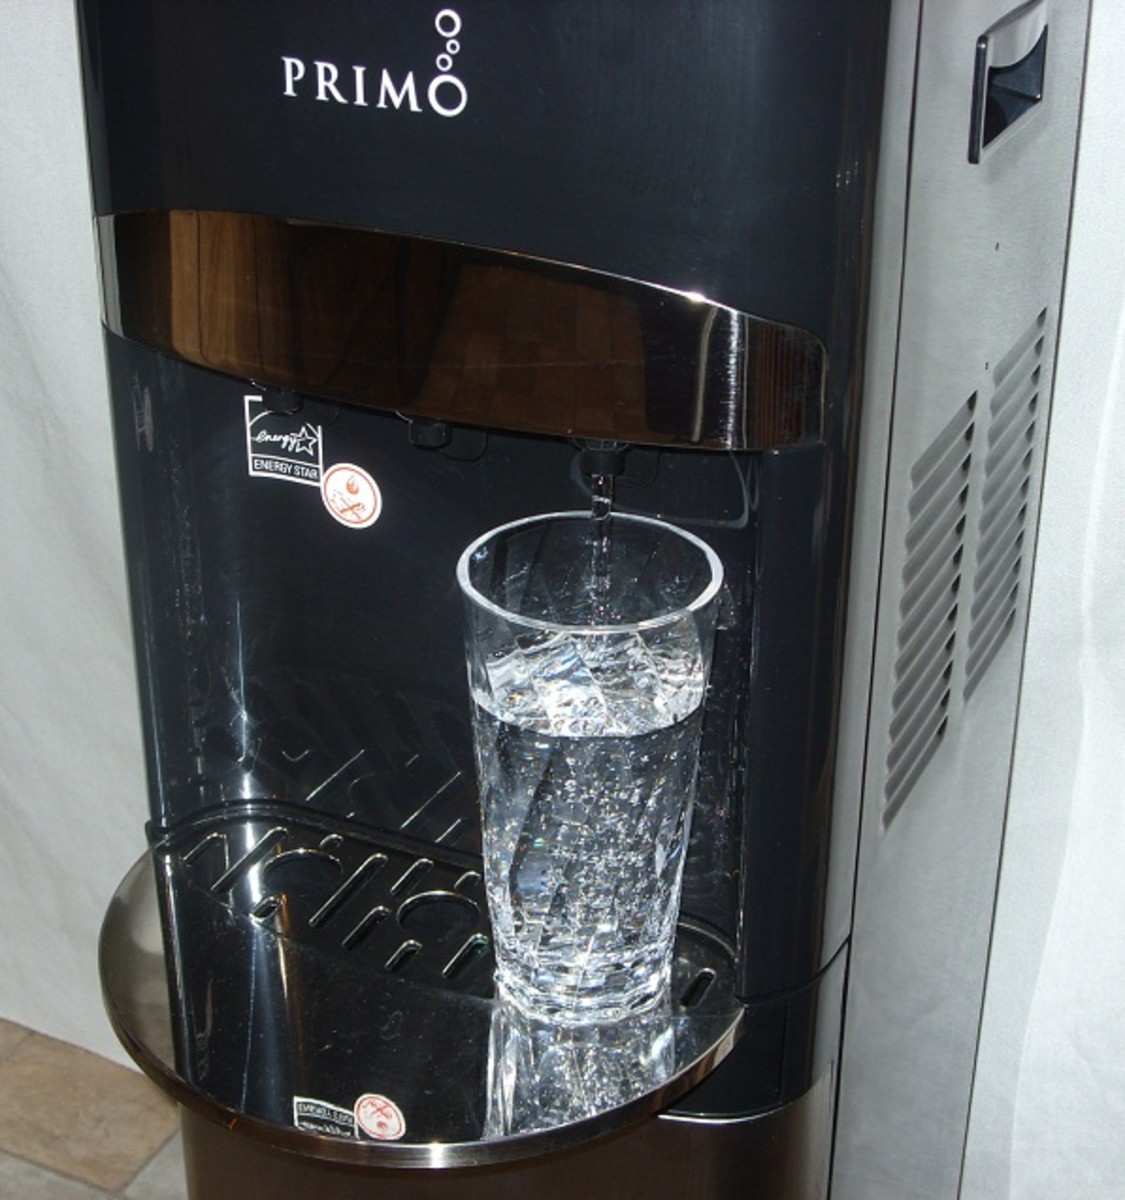 https://images.saymedia-content.com/.image/t_share/MTc0Mjk2MzkwMzQyNTUxMDM2/review-primo-water-dispenser.jpg